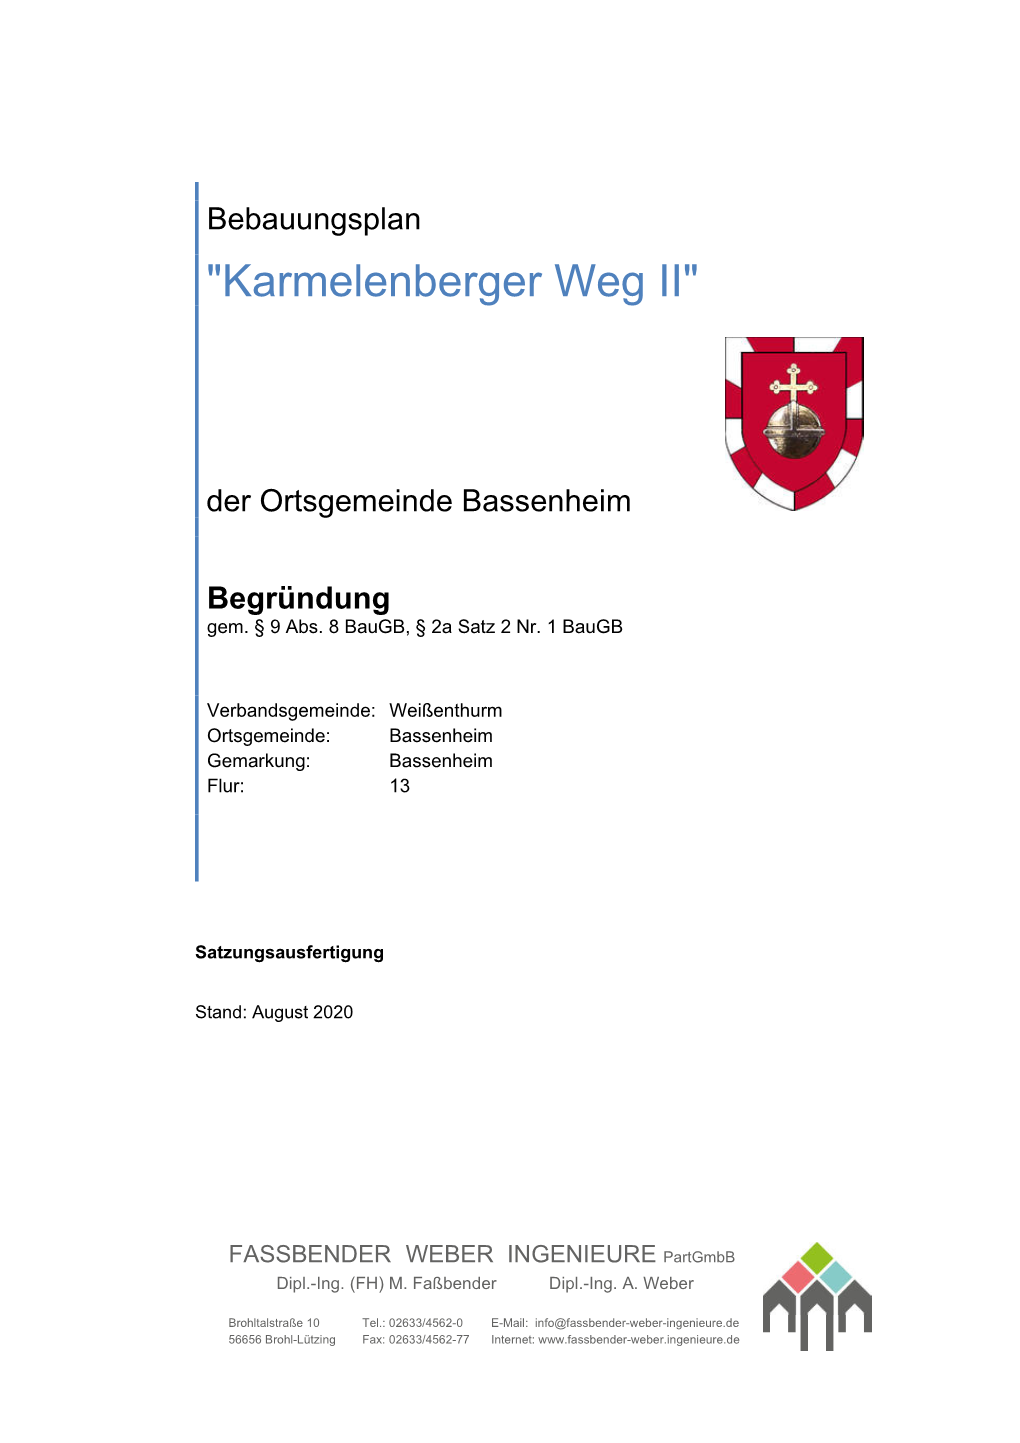 "Karmelenberger Weg II"